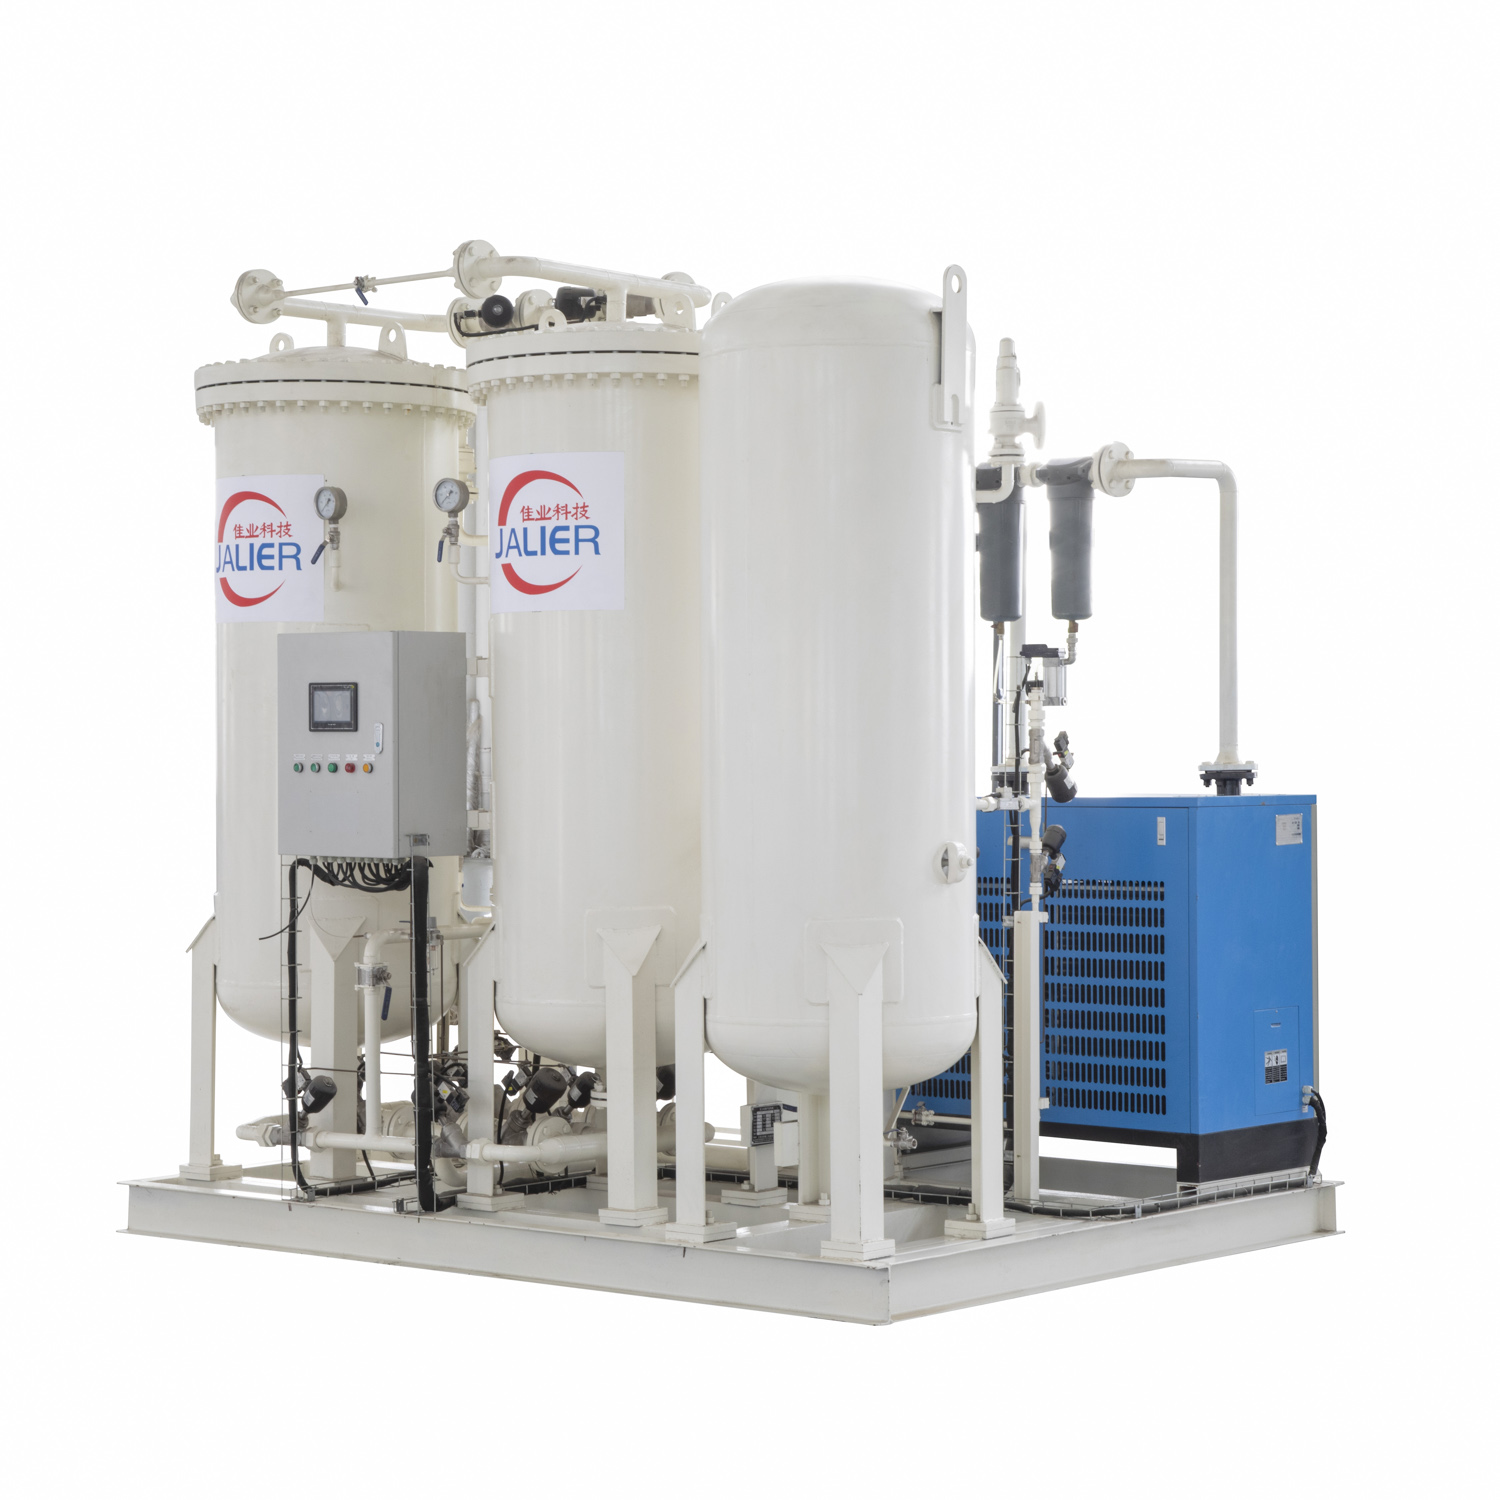 PSA Oxygen Generator Medical Oxigen Making Machine with Filling Cylinder System